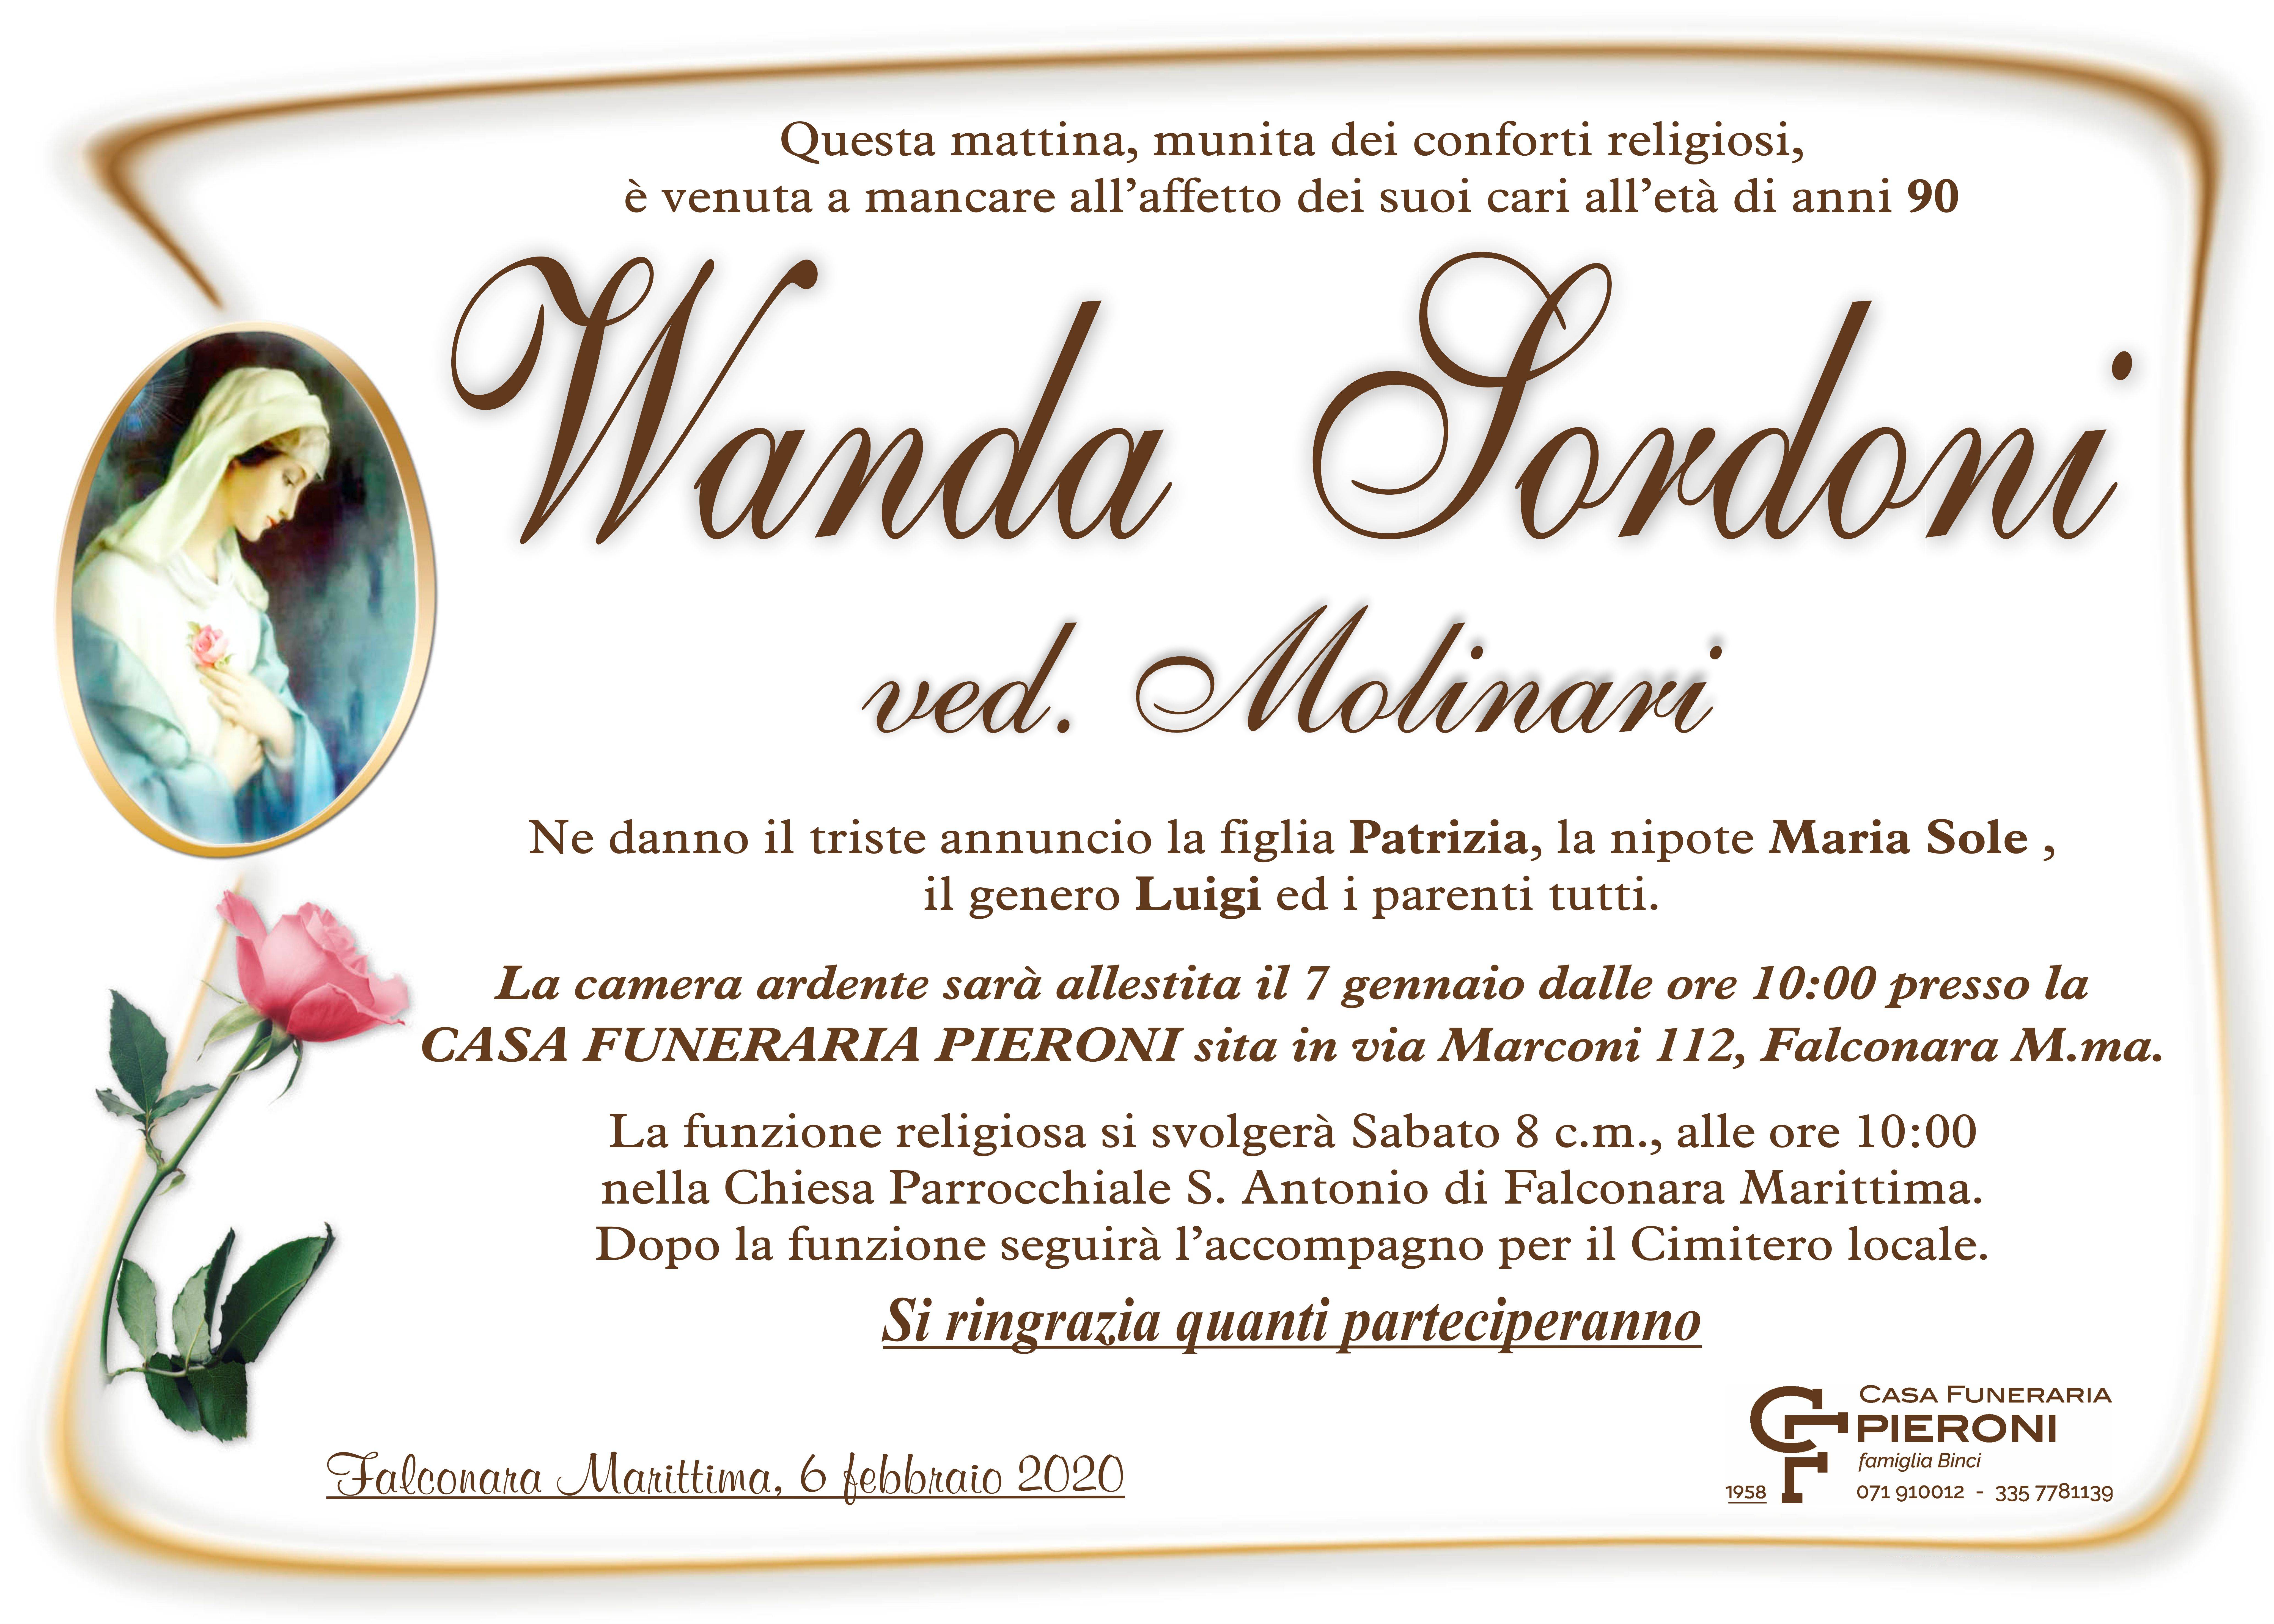 Wanda Sordoni